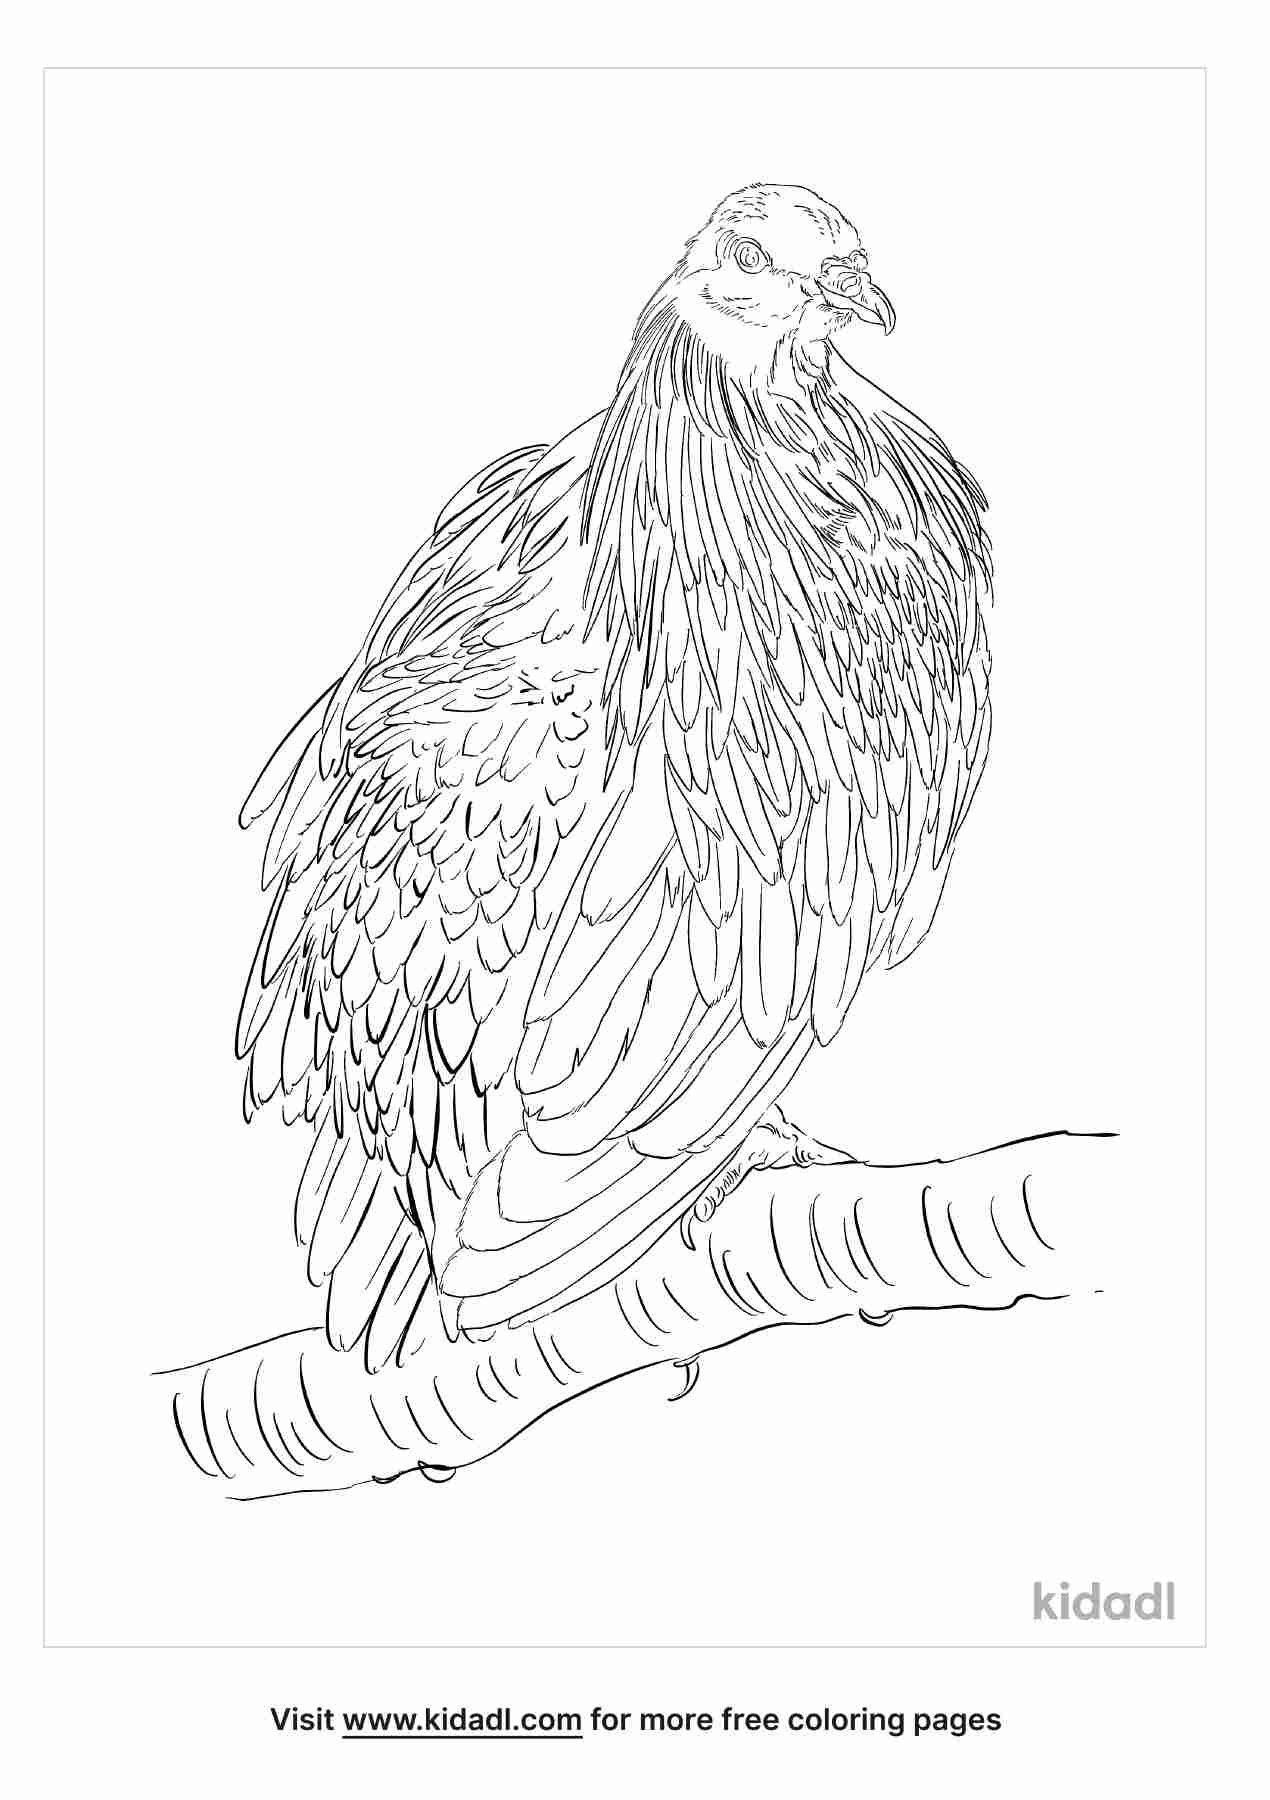 Amazing Nicobar Pigeon coloring page.